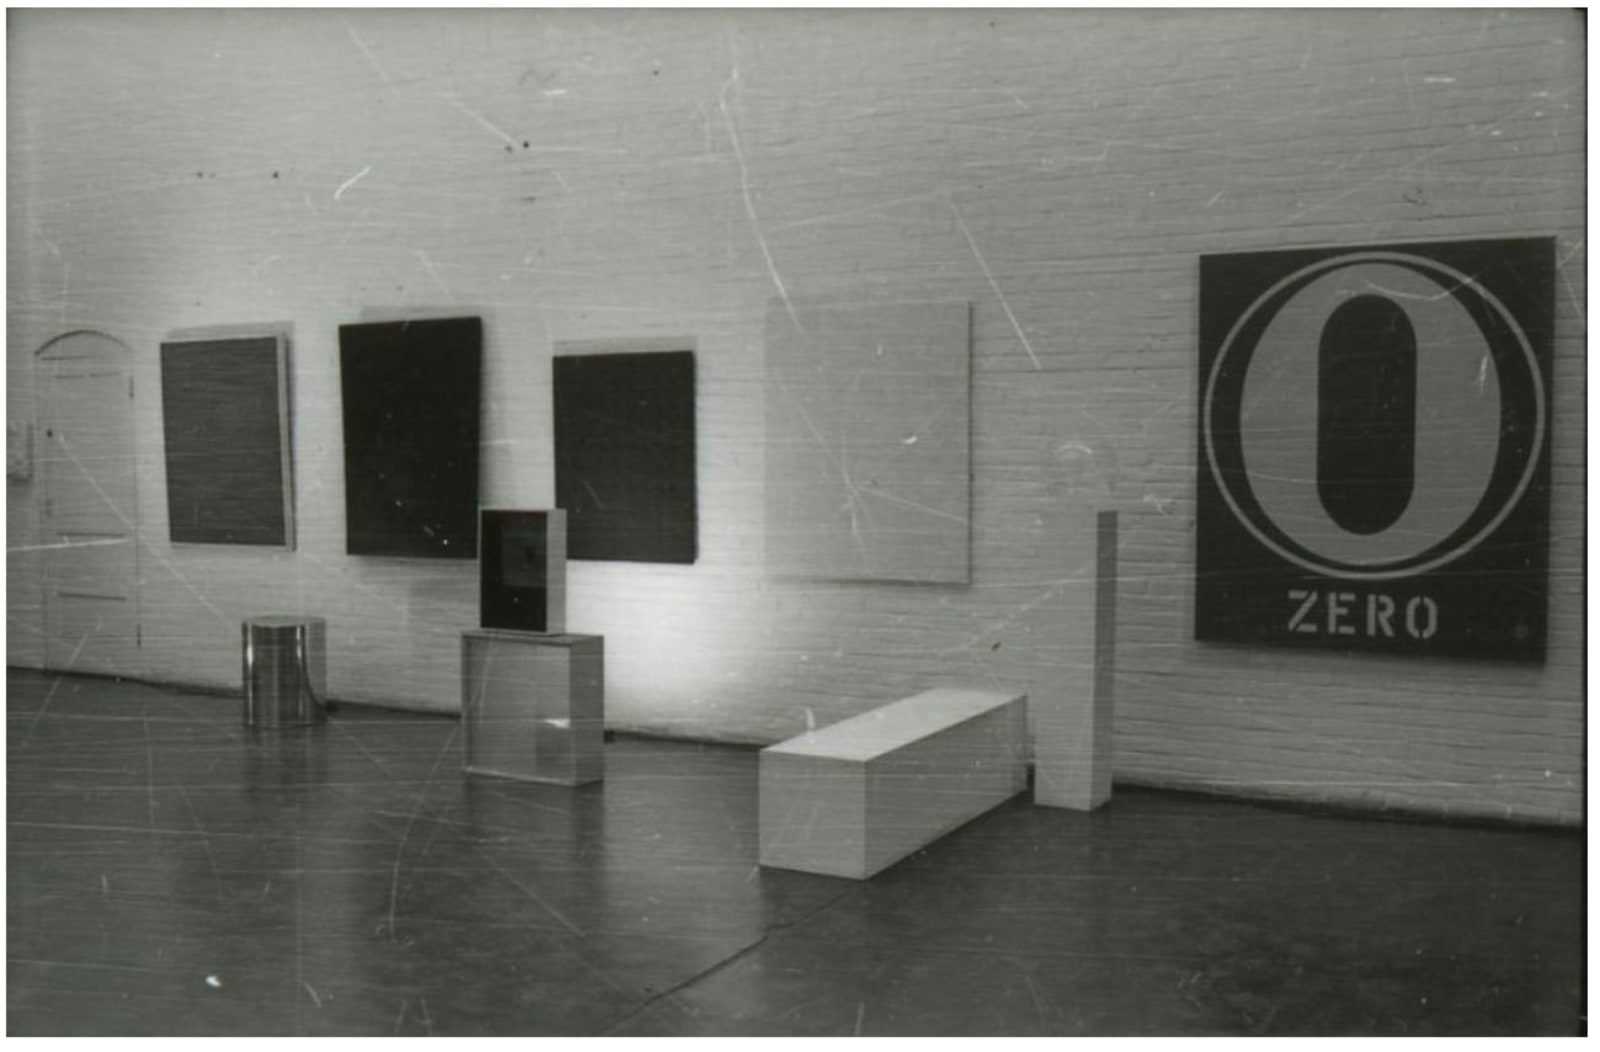 Group Zero - Institute of Contemporary Art - Exhibitions - Robert Indiana